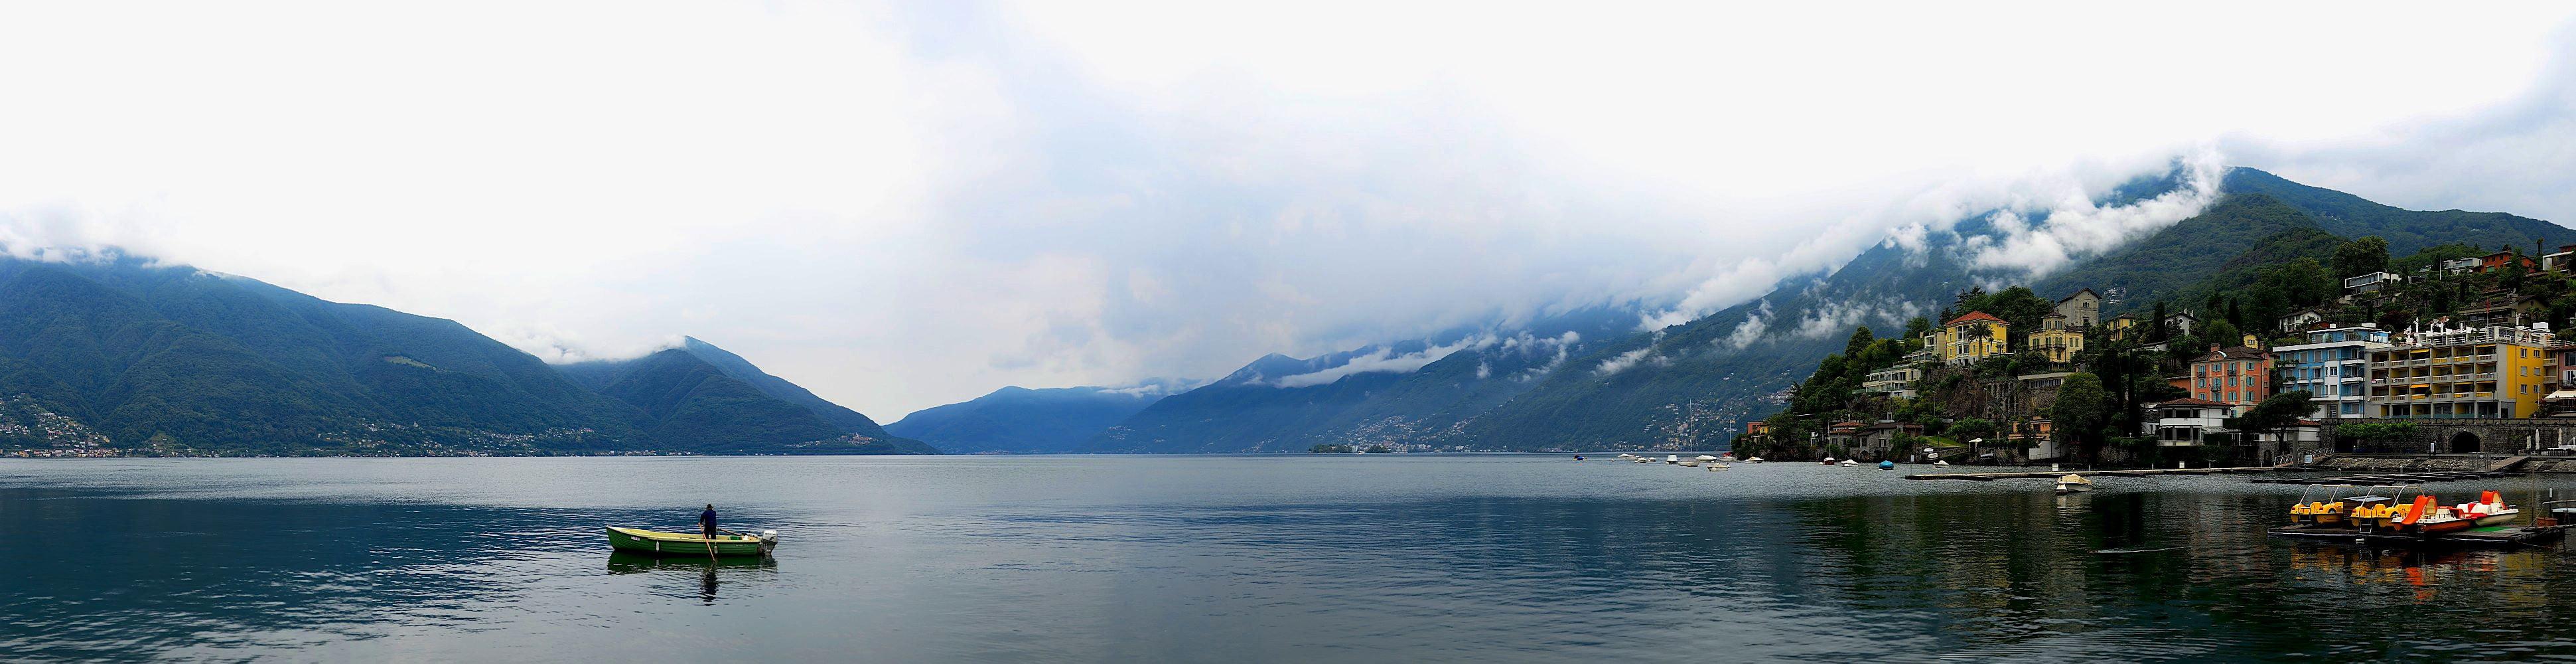 Panoramic photo of person riding on boat, lago maggiore HD wallpaper